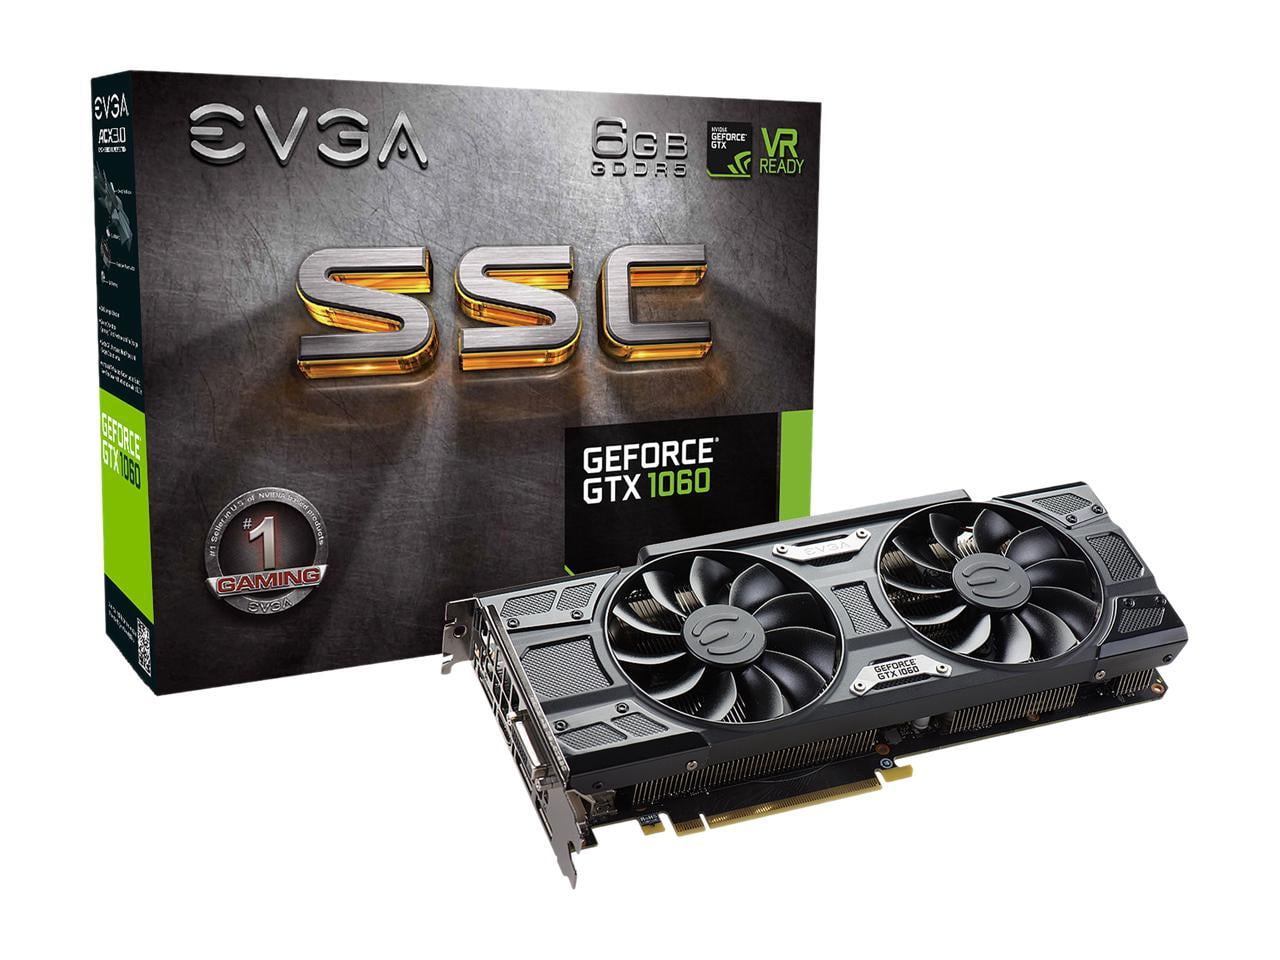 NEW EVGA GeForce GTX 1060 SSC 6GB GDDR5 Gaming Video Graphics Card ...